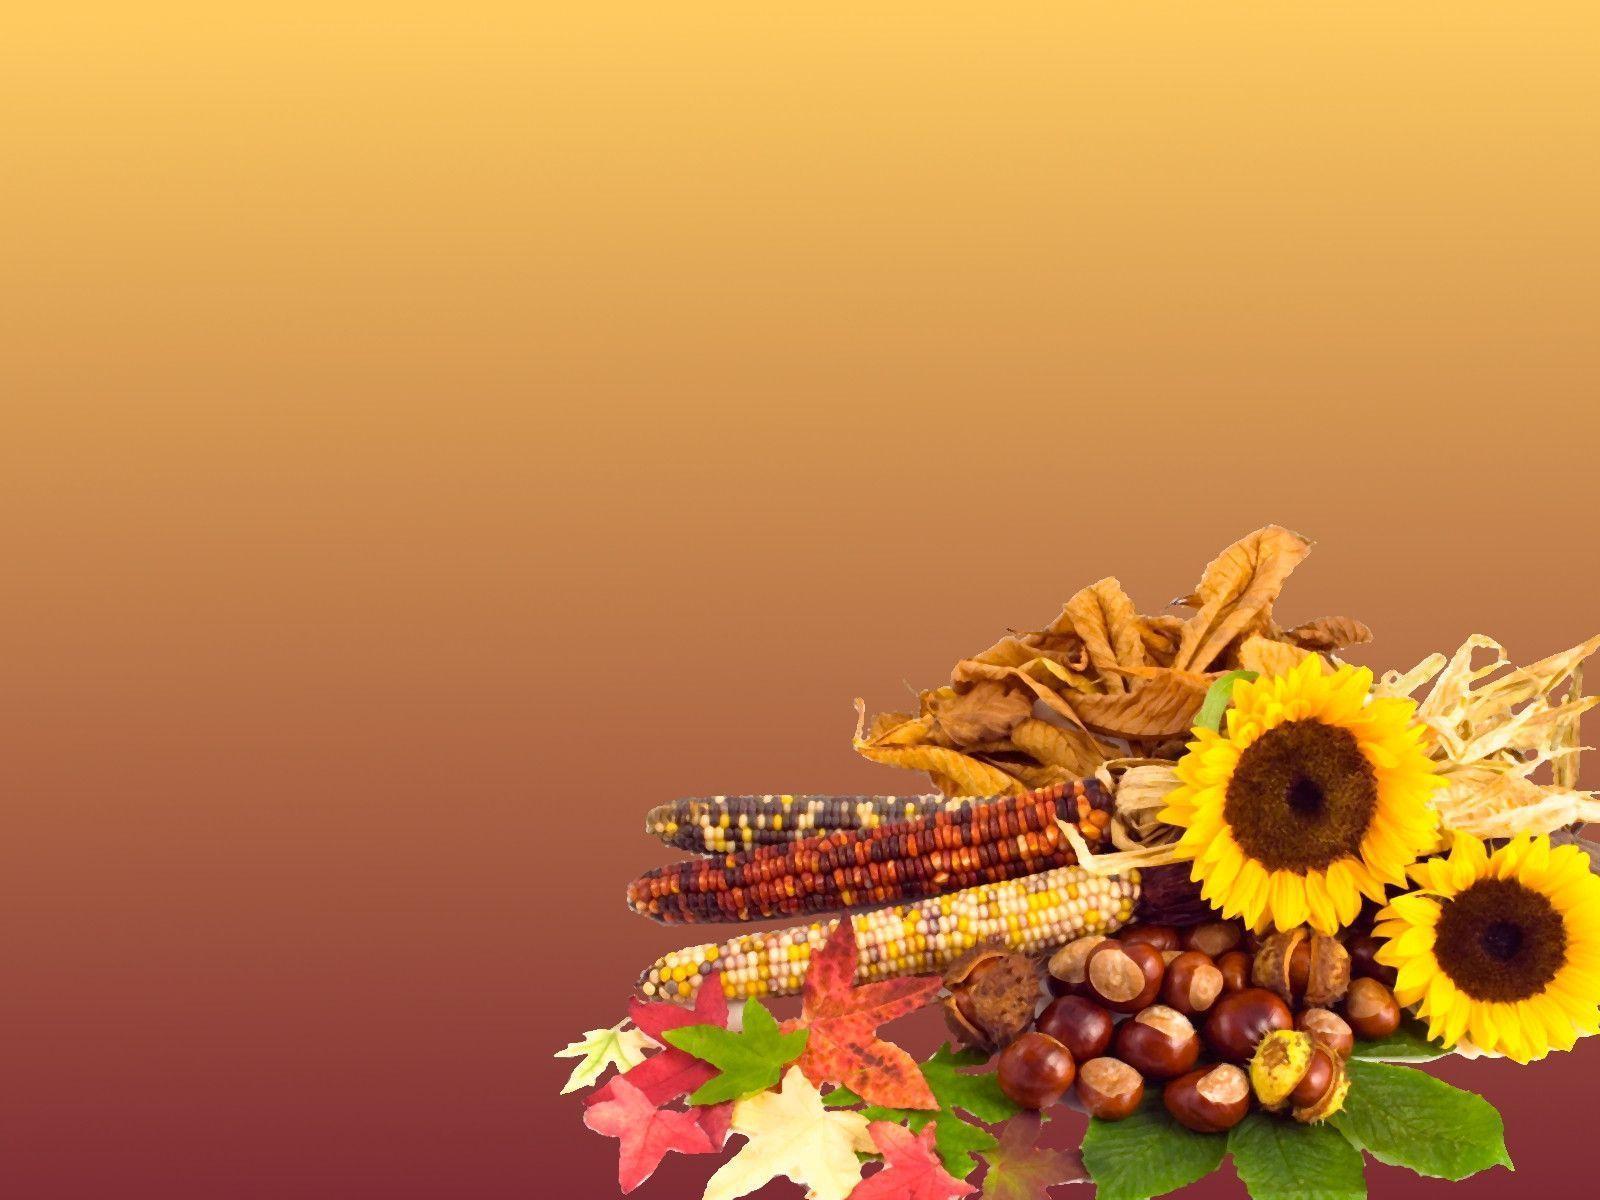 Free Thanksgiving Desktop Wallpaper Background